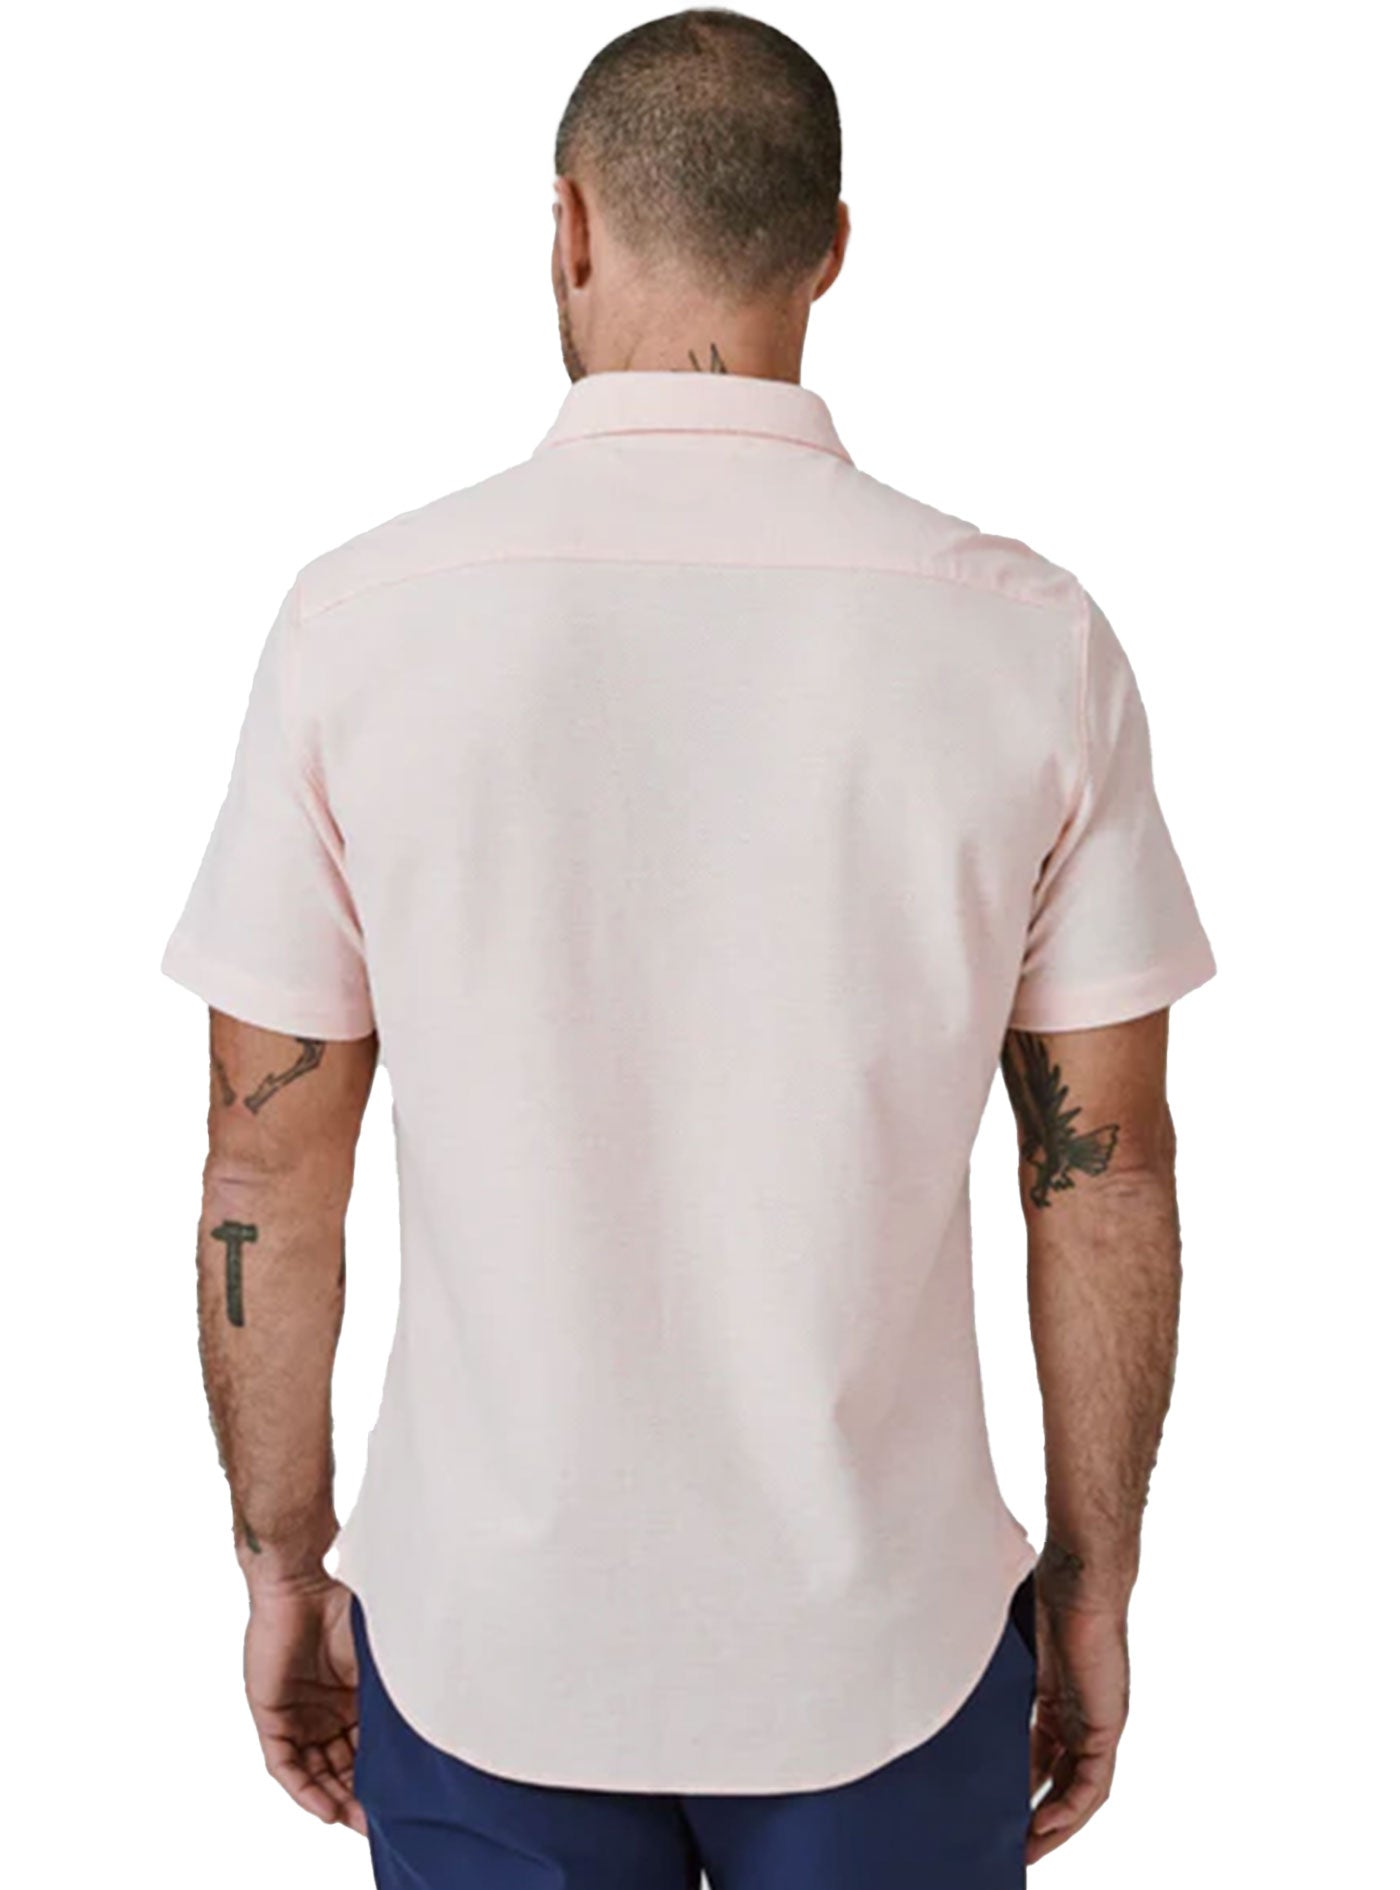 Cabbo Short Sleeve Shirt (Coral)